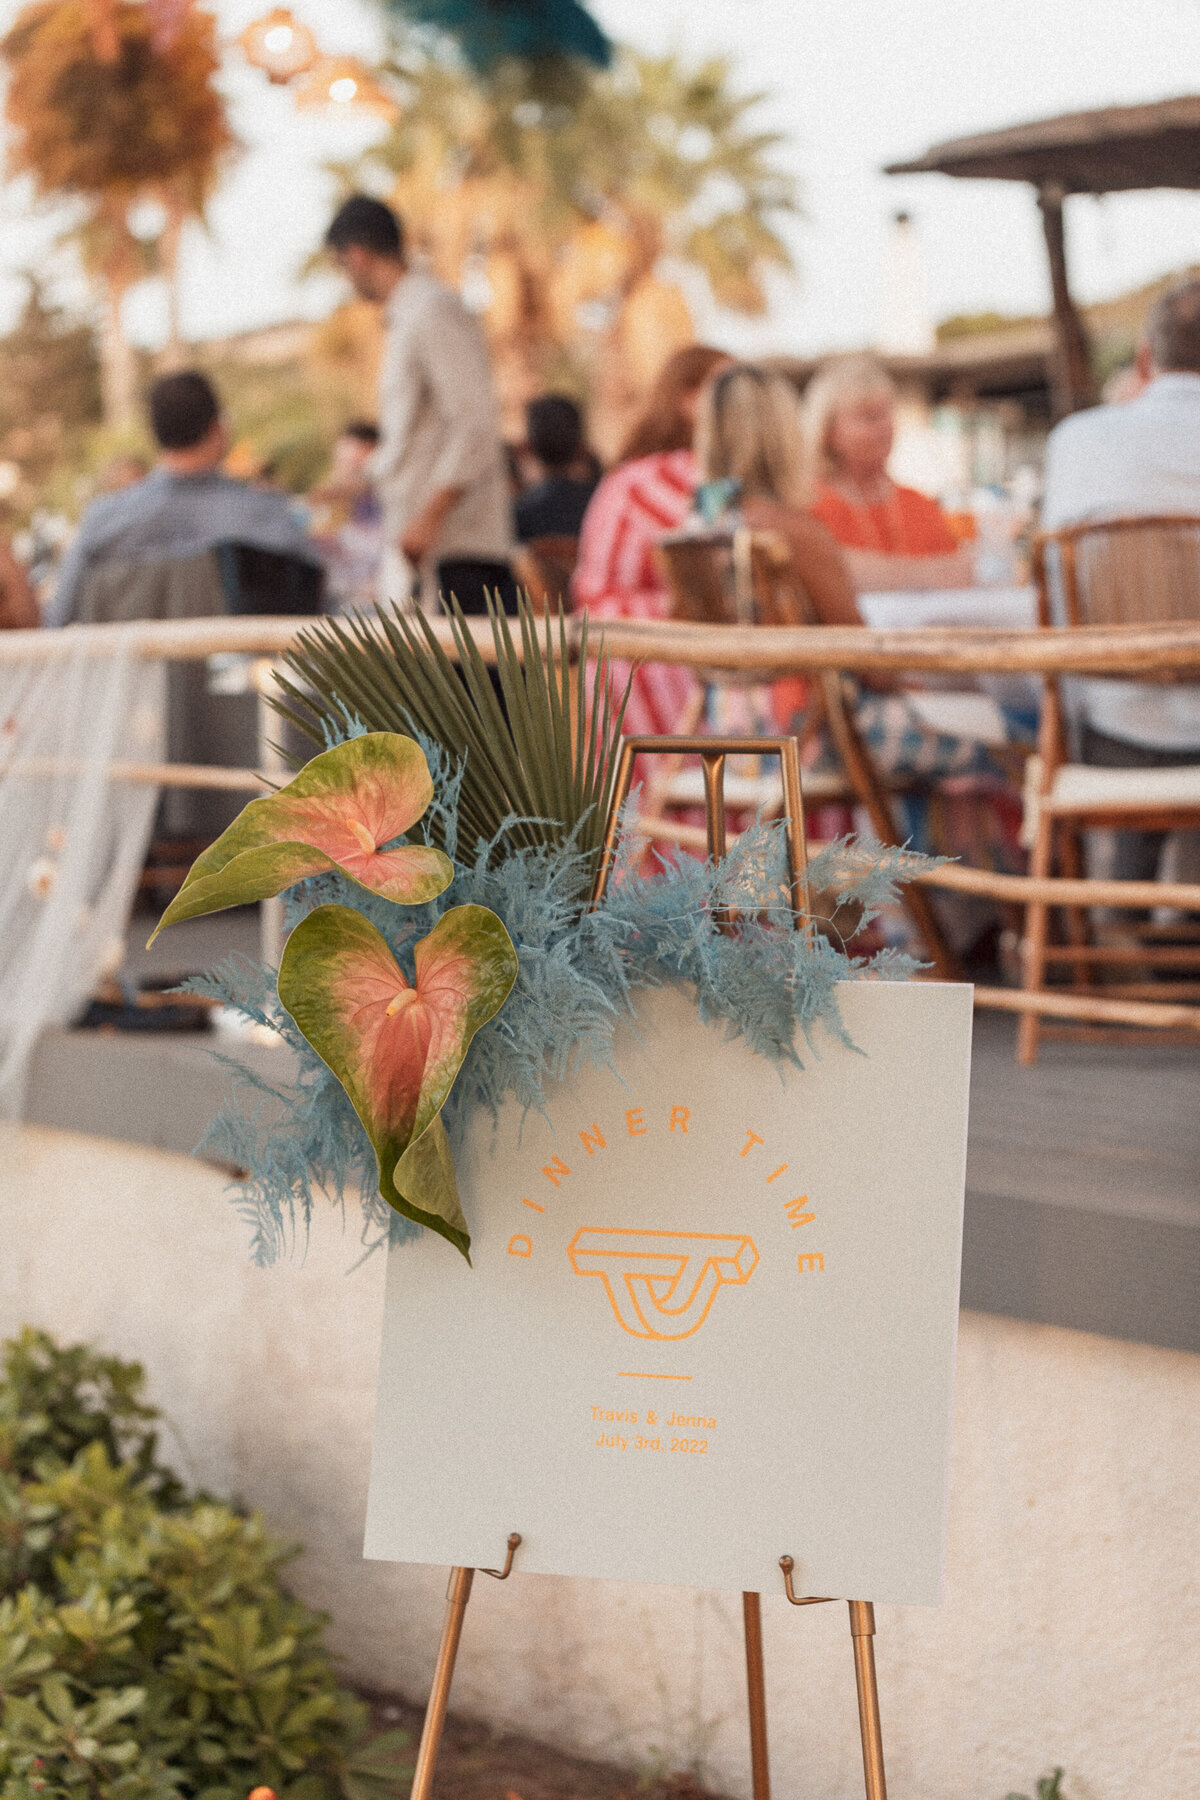 Creative Wedding Sign Ideas | Destination Wedding in Sardinia